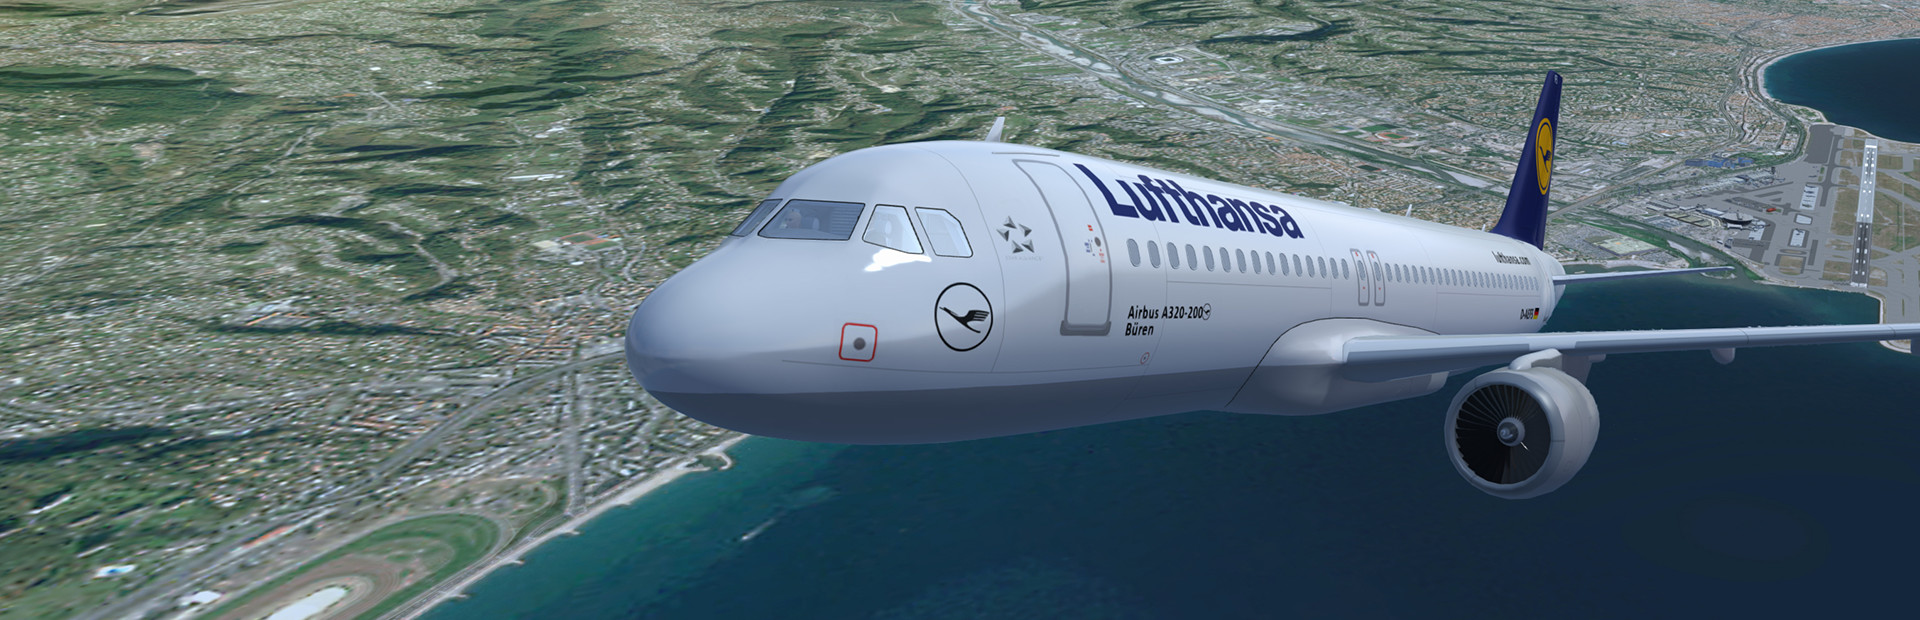 Urlaubsflug Simulator – Holiday Flight Simulator cover image